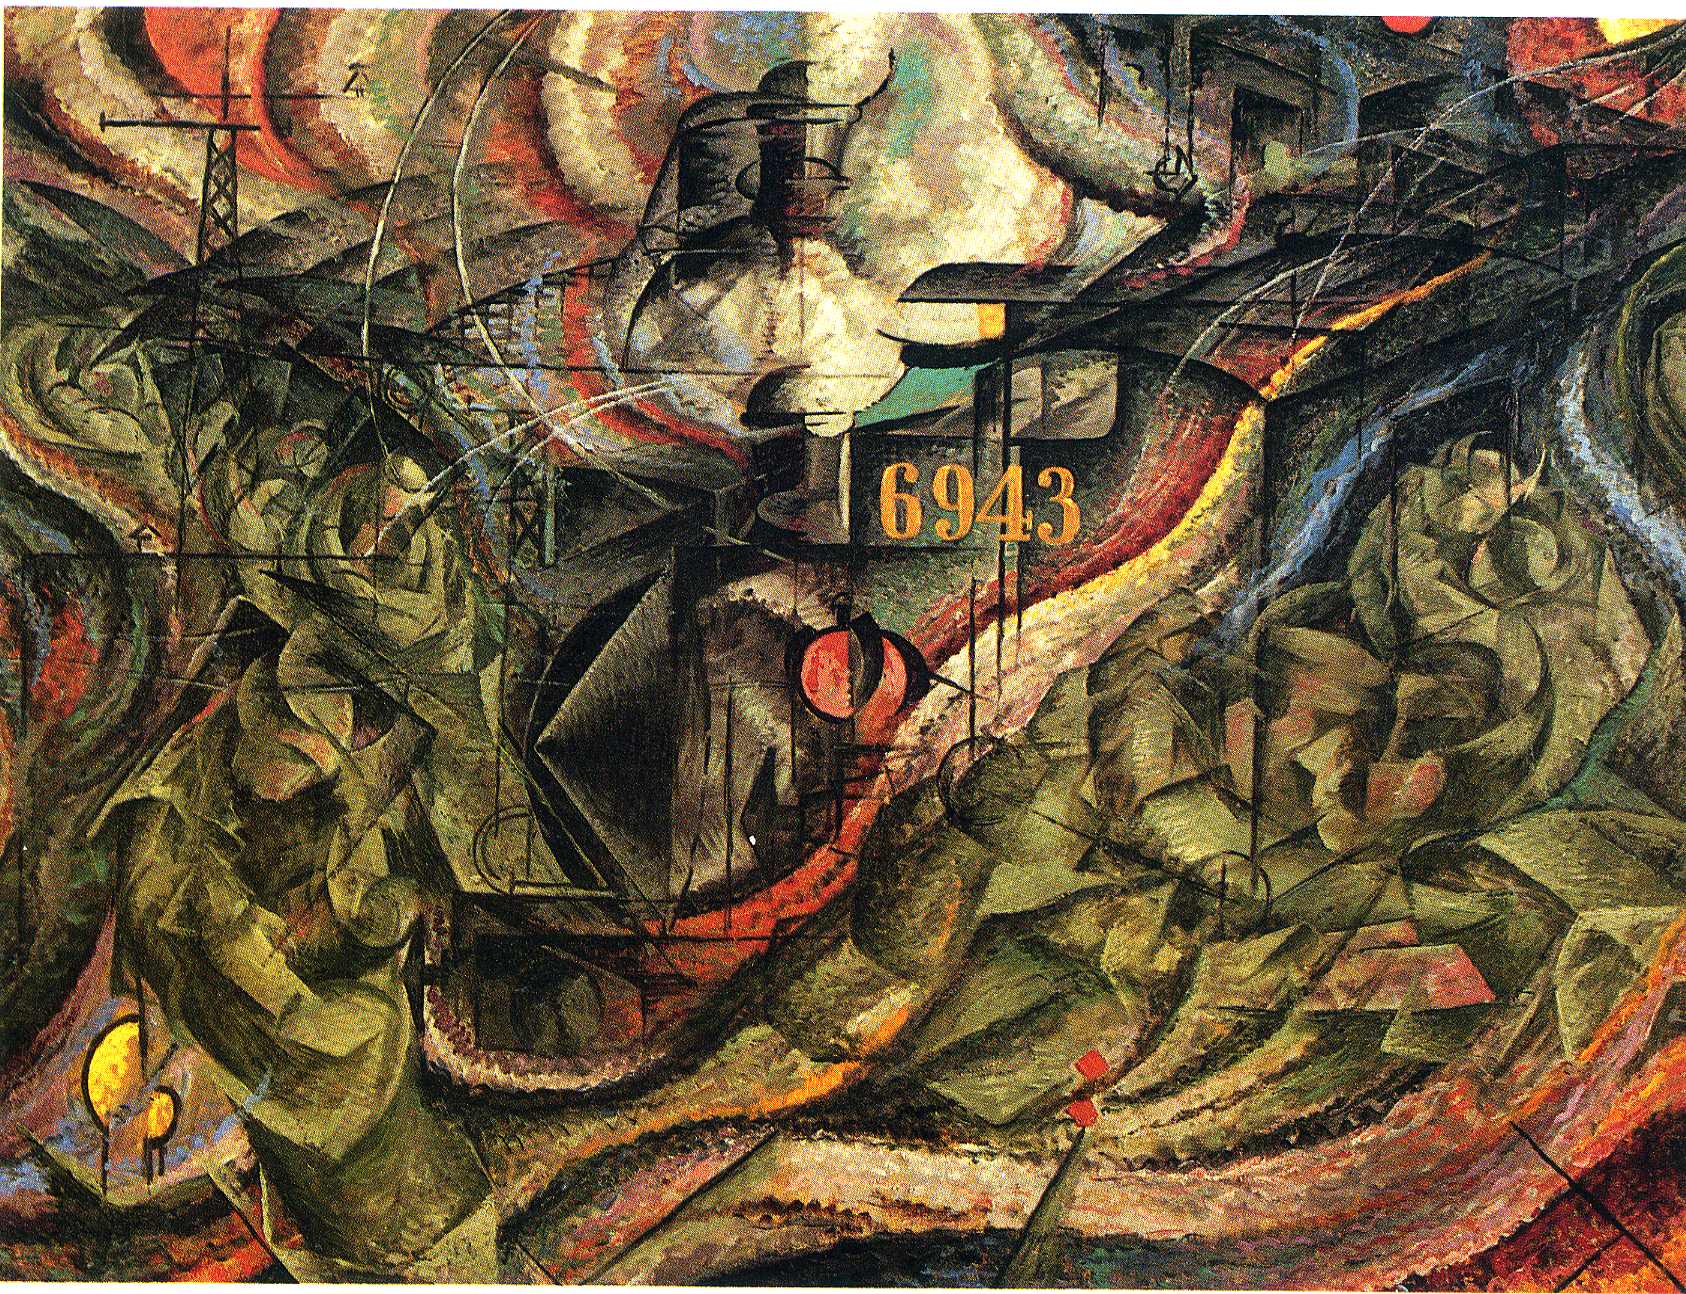 Stări mintale I: La revedere by Umberto Boccioni - 1911 - 70.5 x 96.2 cm 